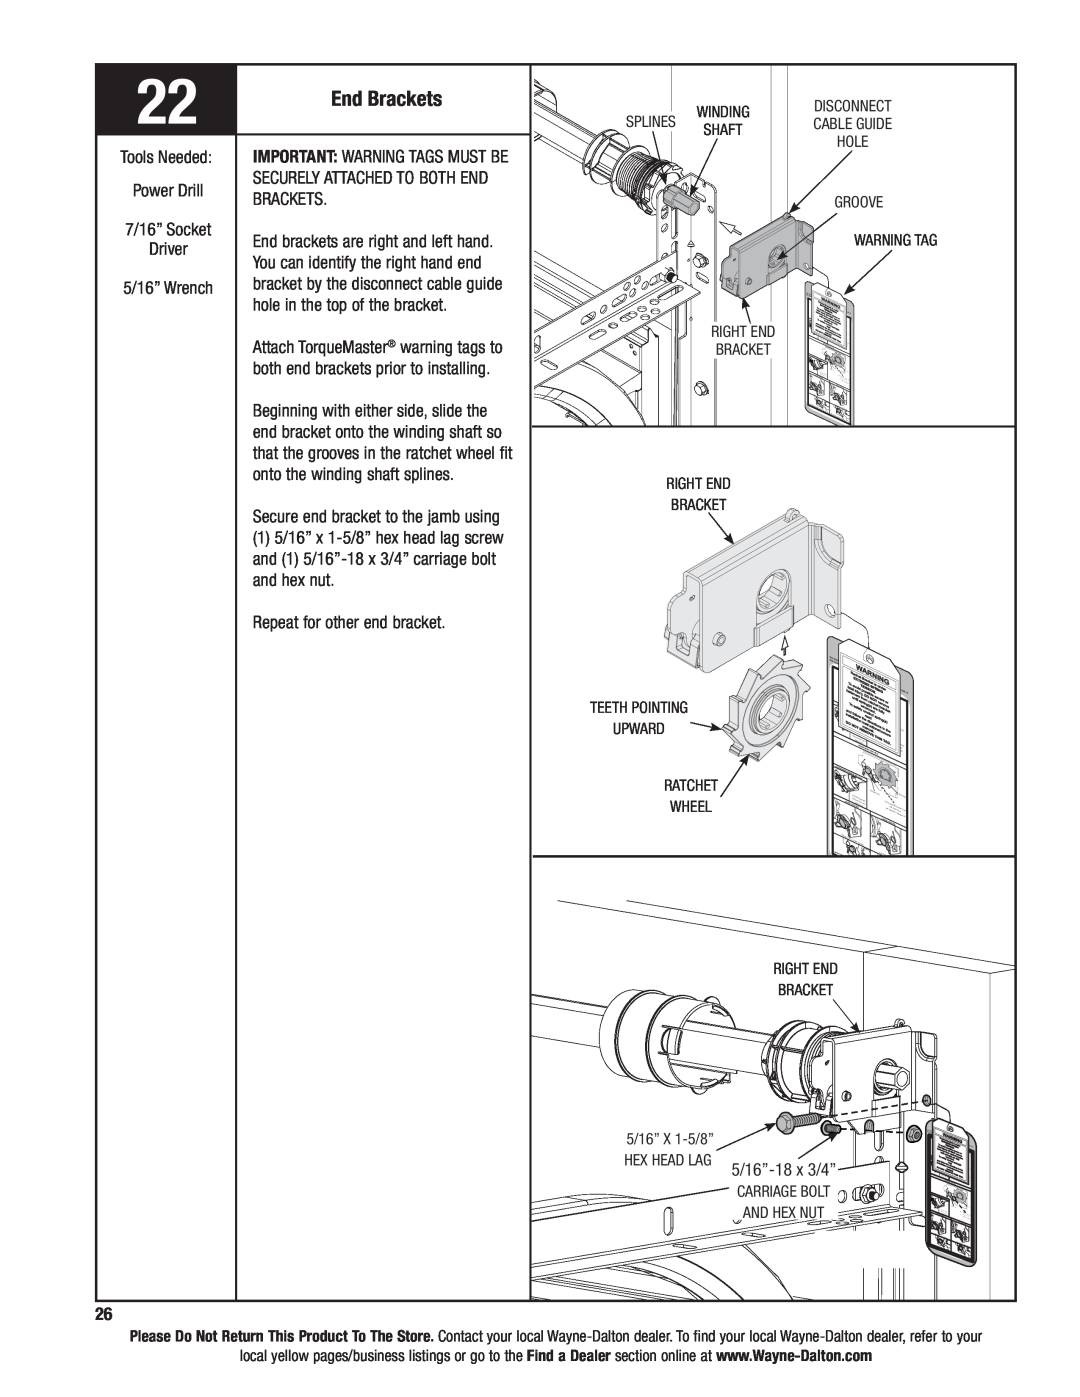 Wayne-Dalton 9400, AND 9600 installation instructions End Brackets, CARRIAGE BolT 